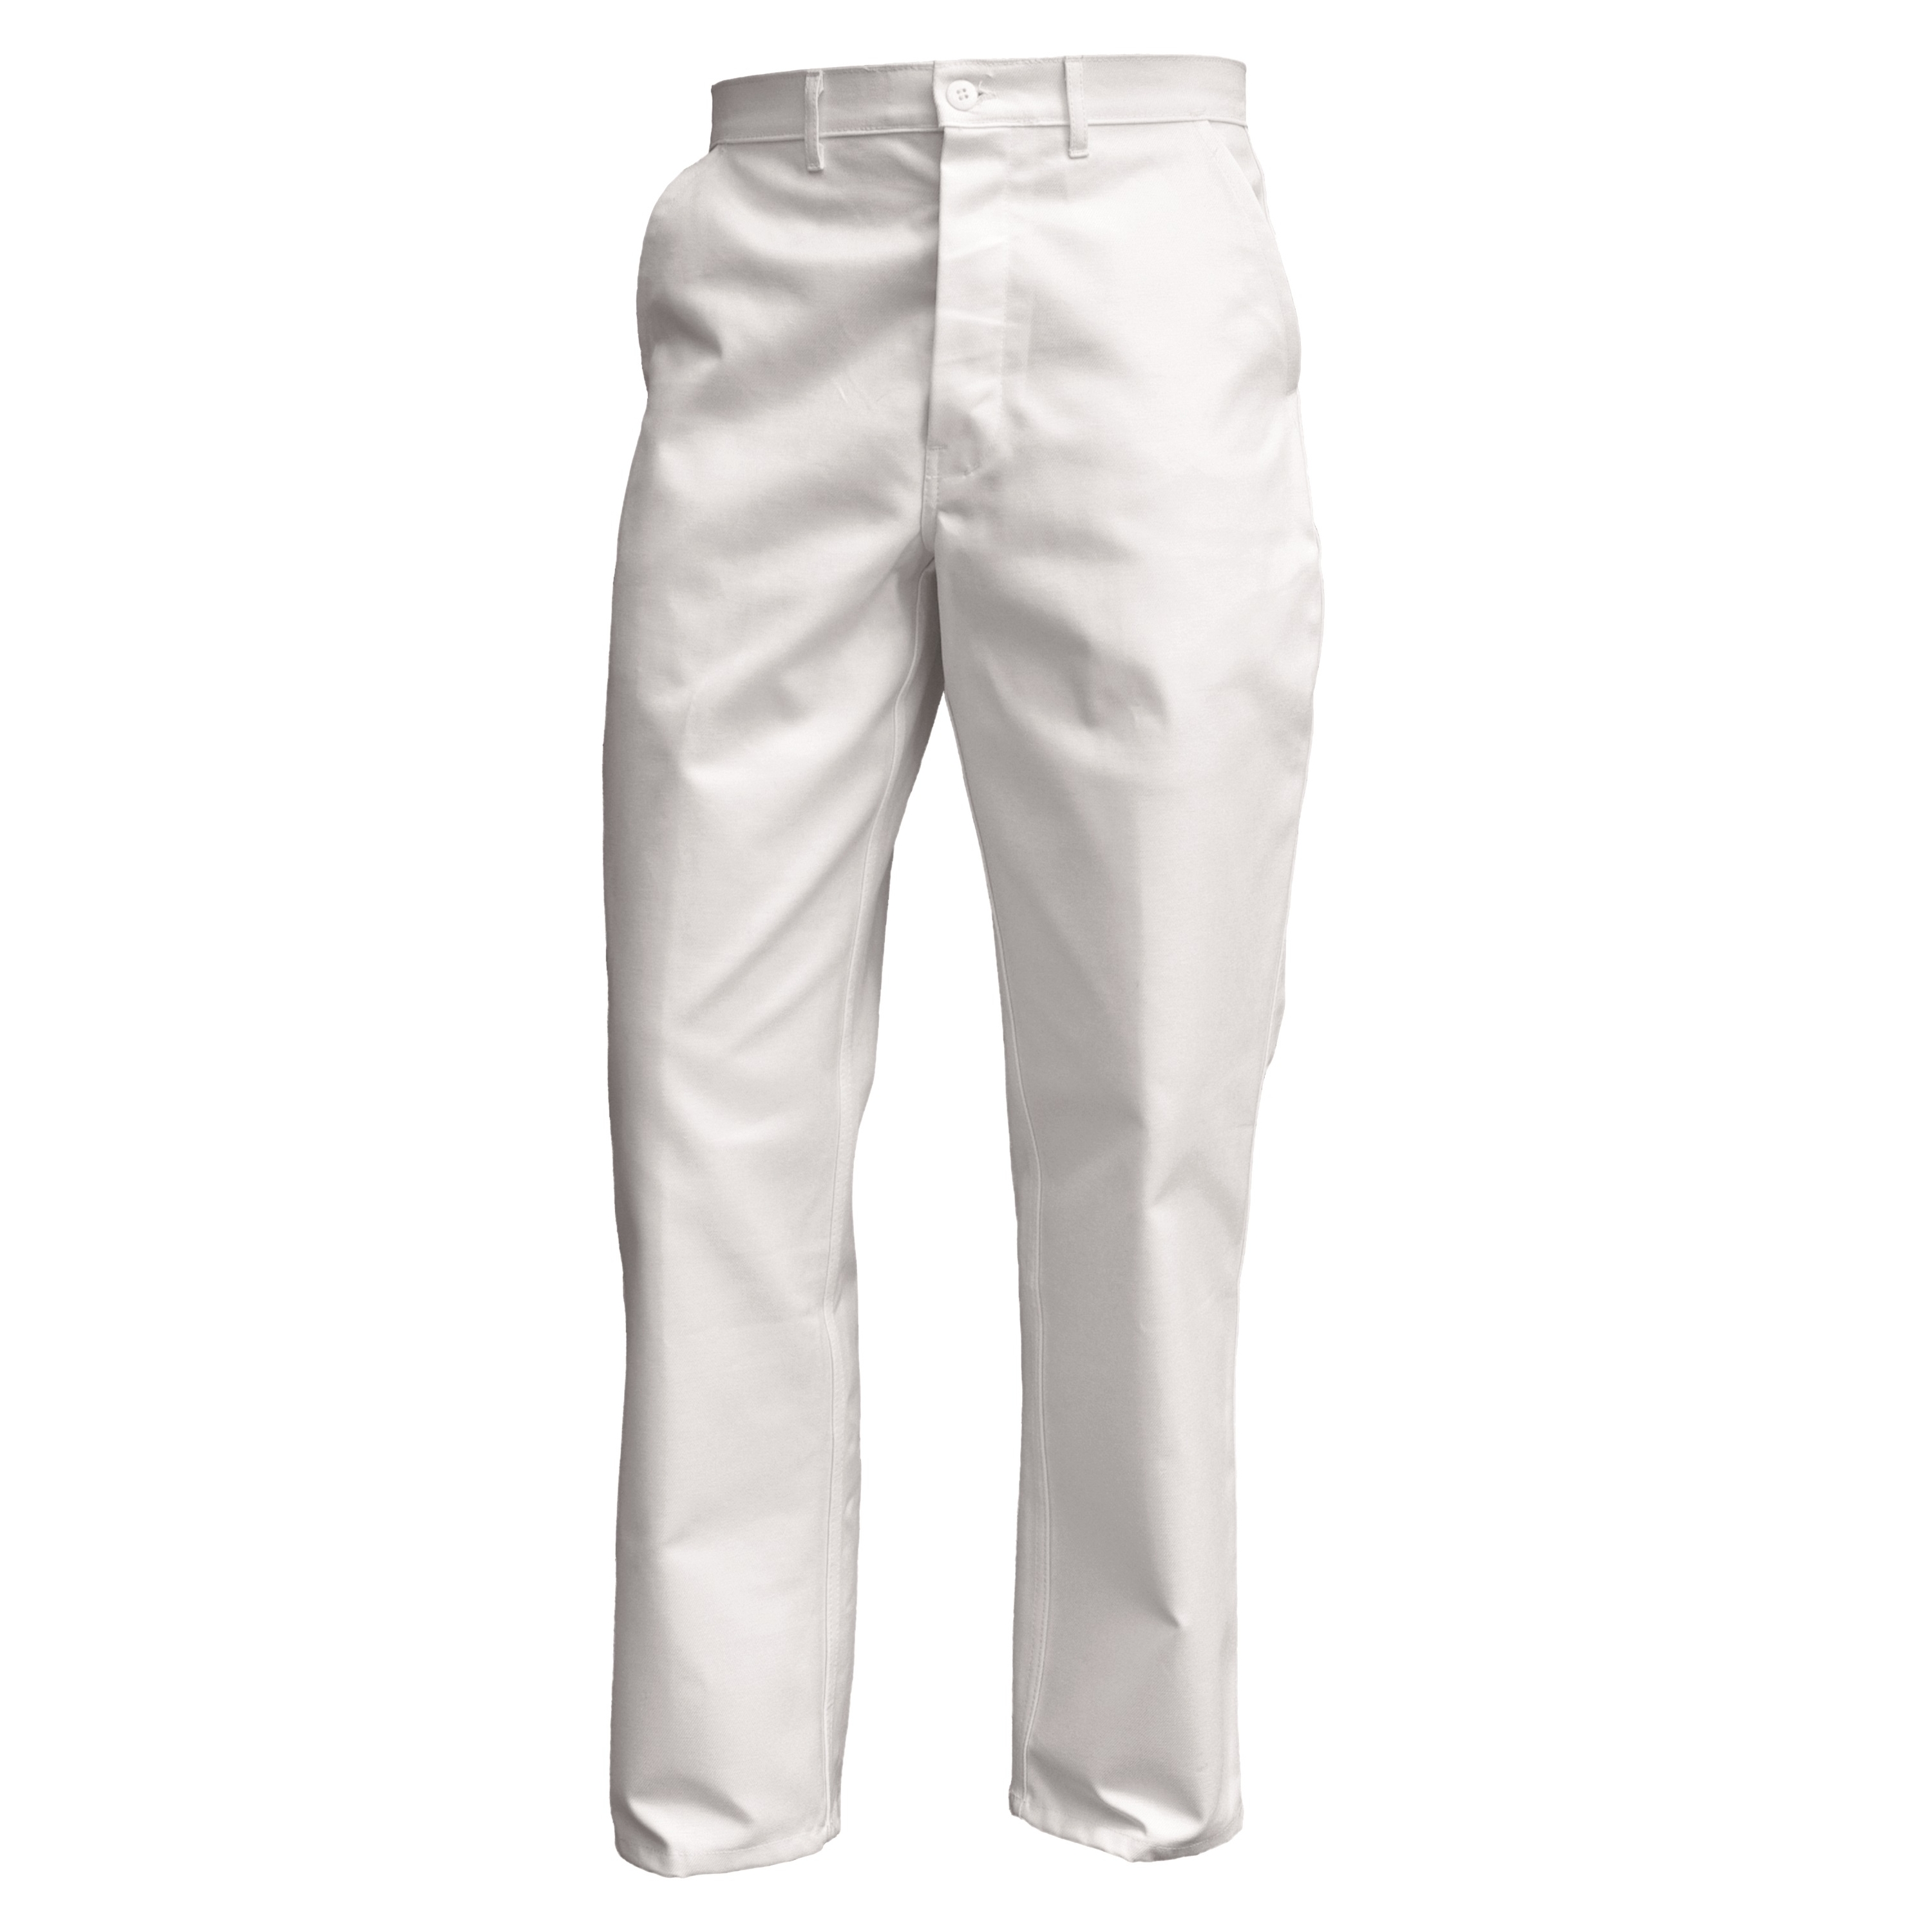 Pantalon de travail premier prix pas cher Blanc